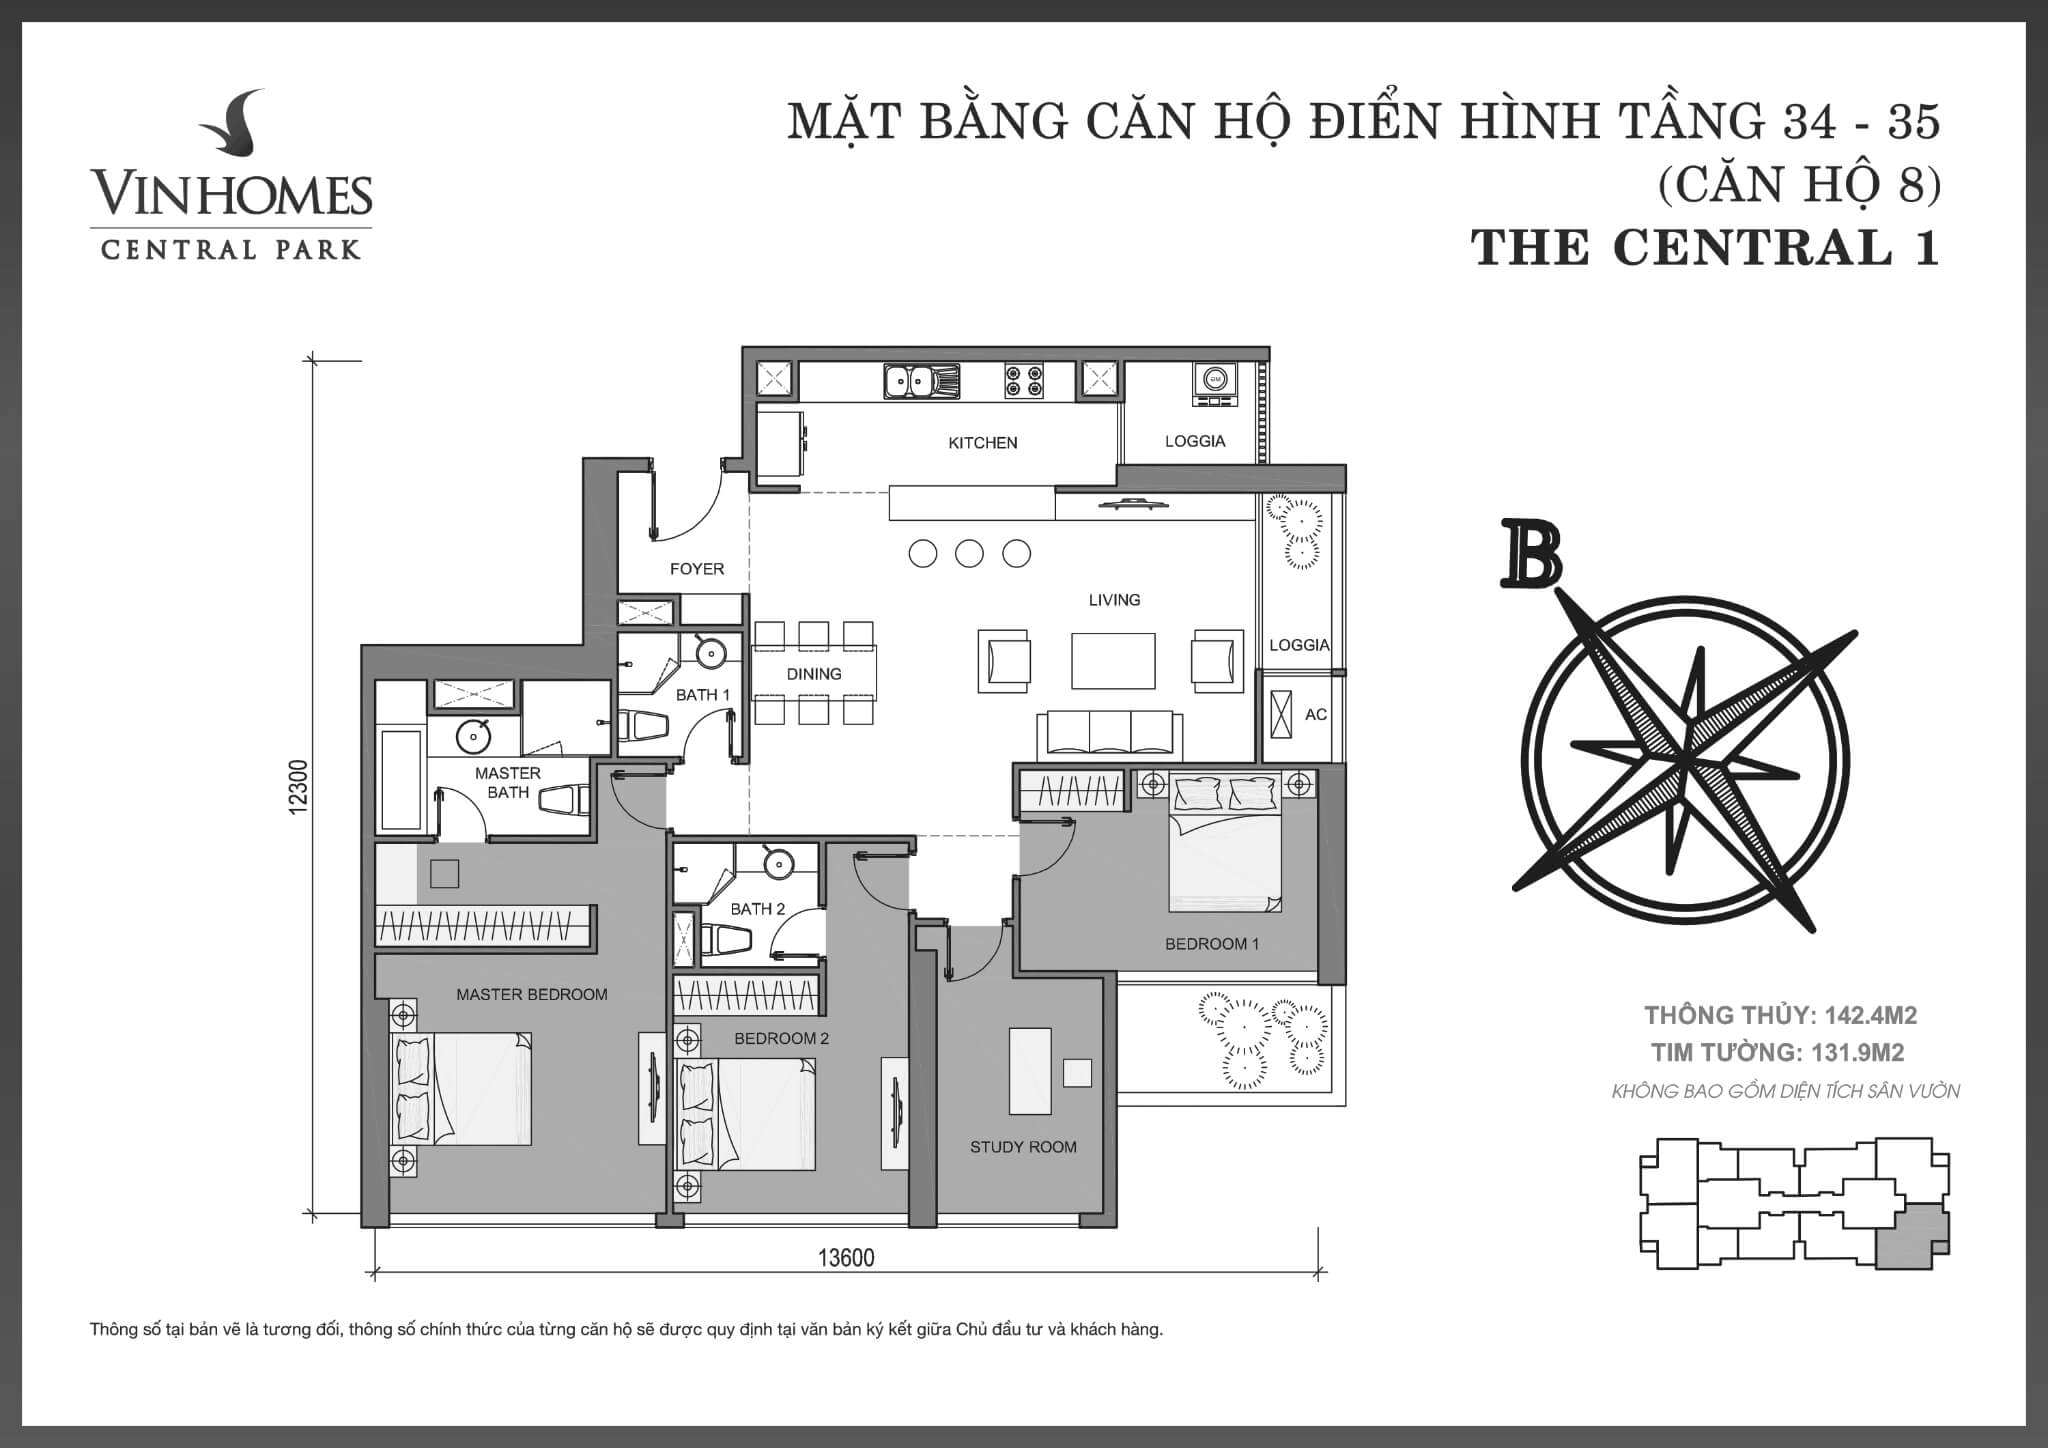 Layout căn hộ số 08 tầng 34-35 tòa The Central 1 - Mặt bằng Vinhomes Central Park